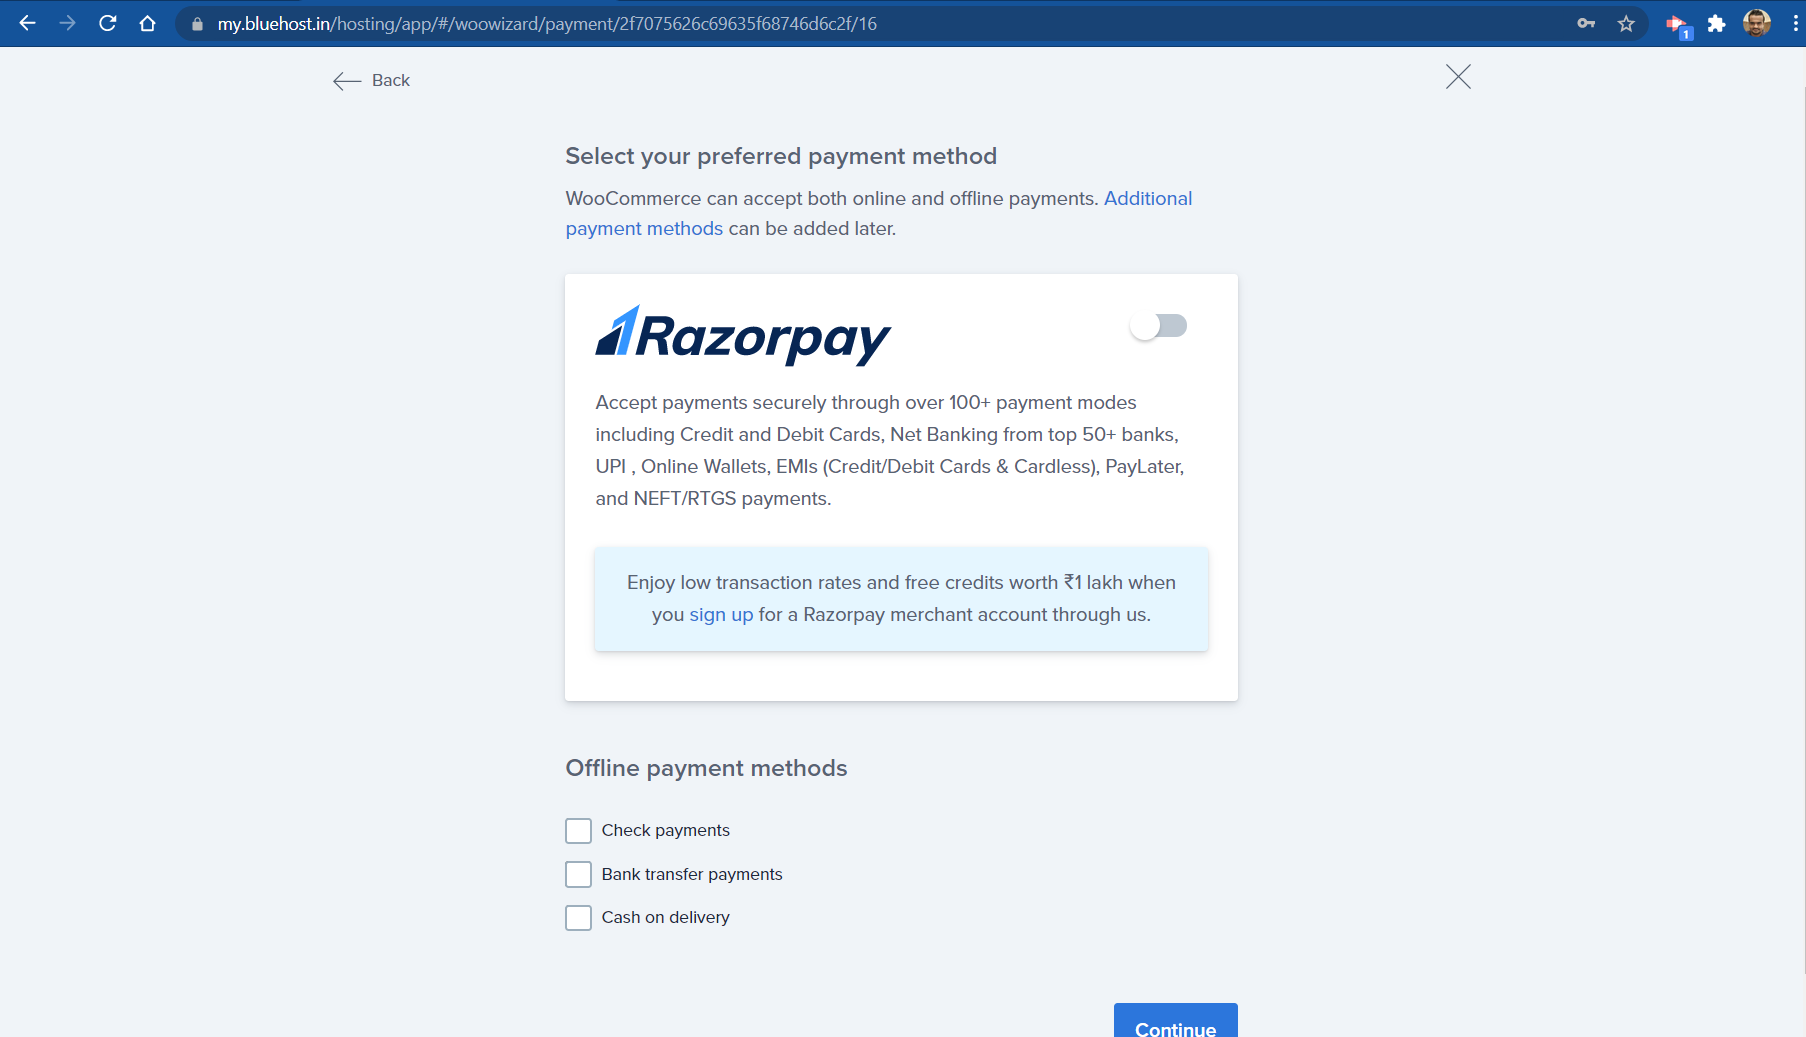 Activate your Razorpay account